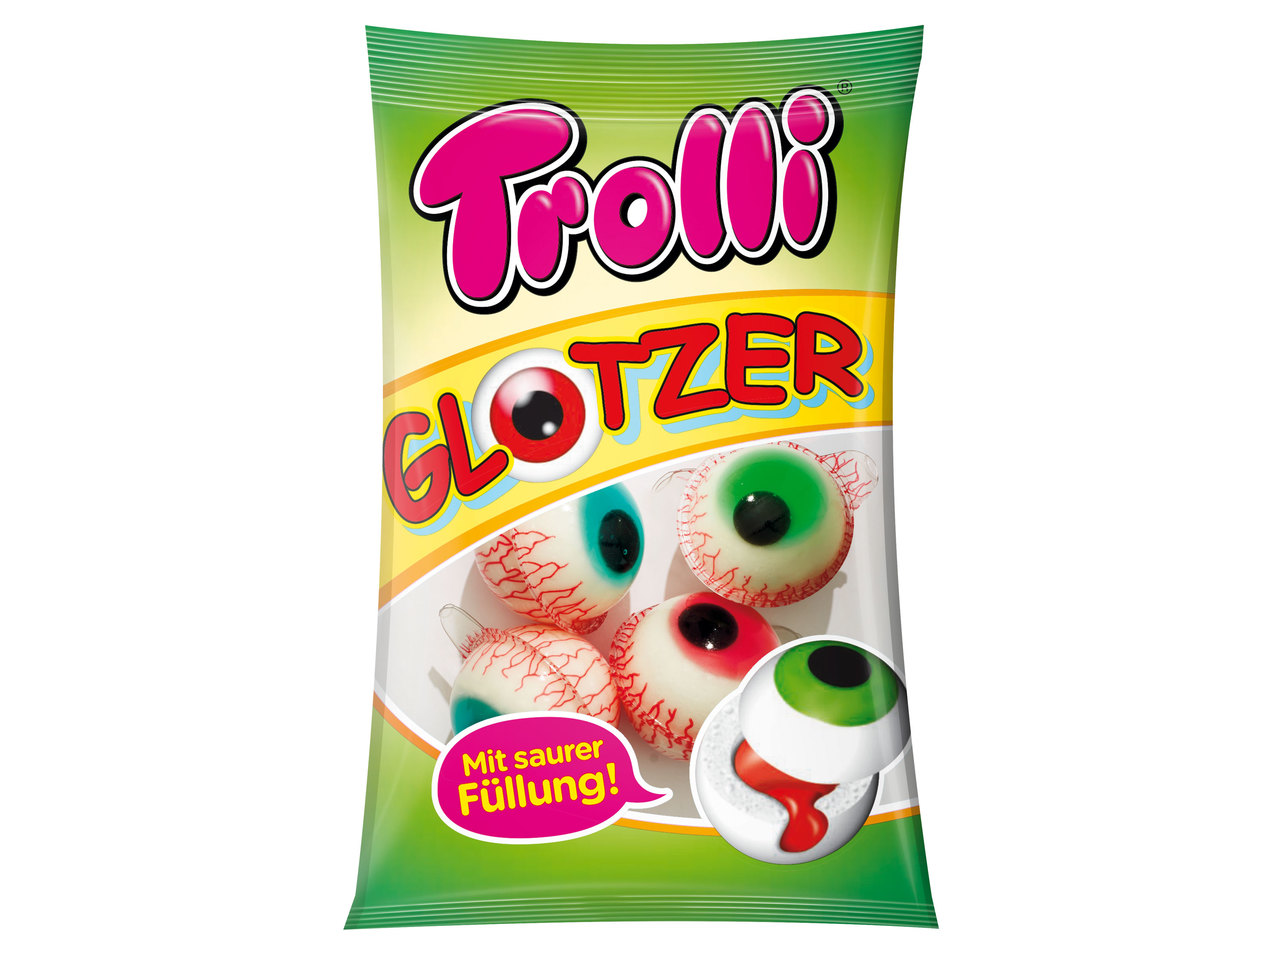 TROLLI Glotzer